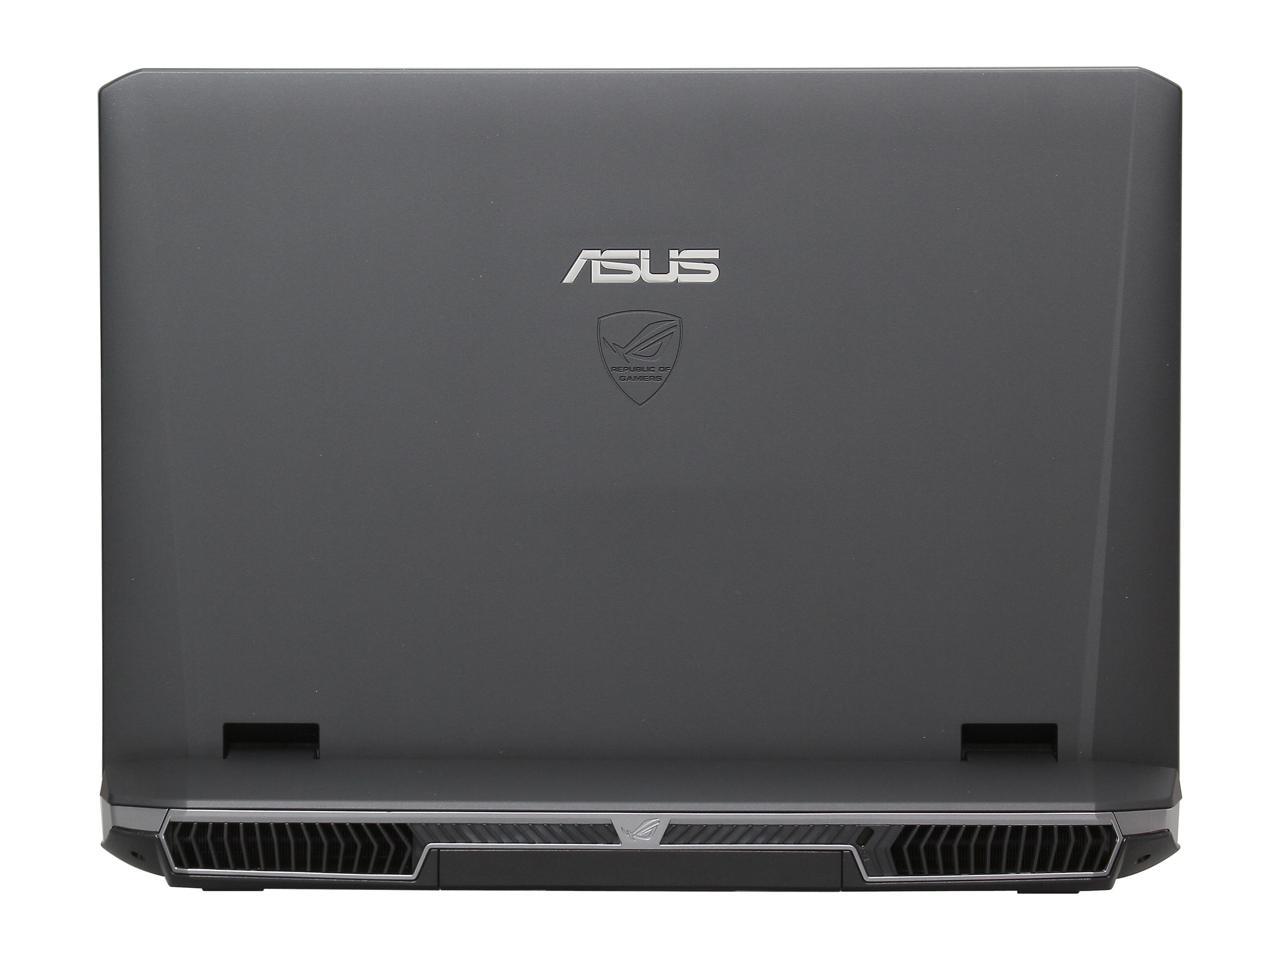 ASUS G75VW-DH72 Gaming Laptop Intel Core i7-3630QM 2.4GHz 17.3